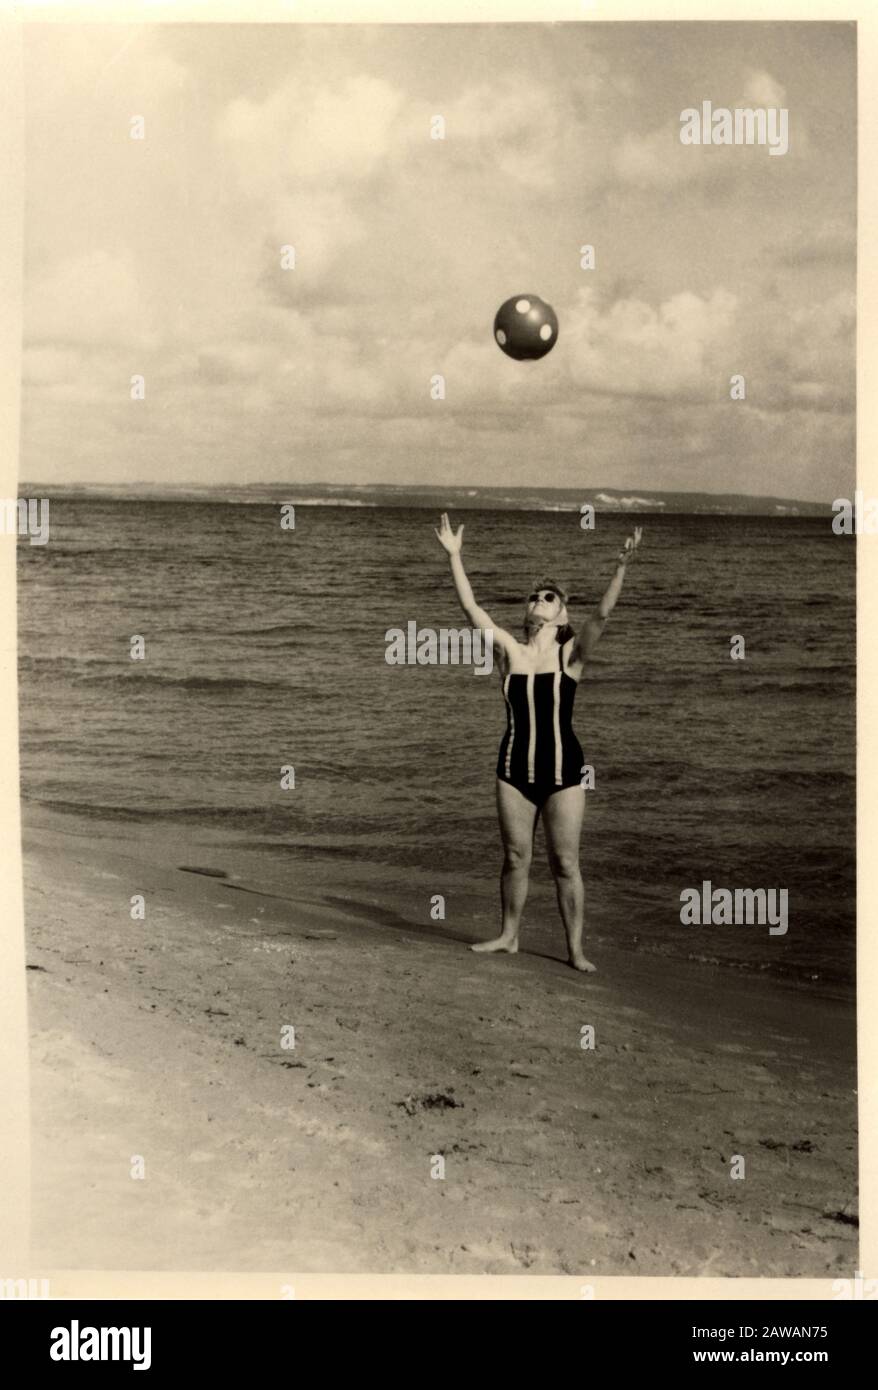 1950's , Baltic Sea , GERMANY : Sun bathers at beach - sand  - swimming  - GERMANIA  - FOTO STORICHE - HISTORY - GEOGRAFIA - GEOGRAPHY  - Archivio GBB Stock Photo